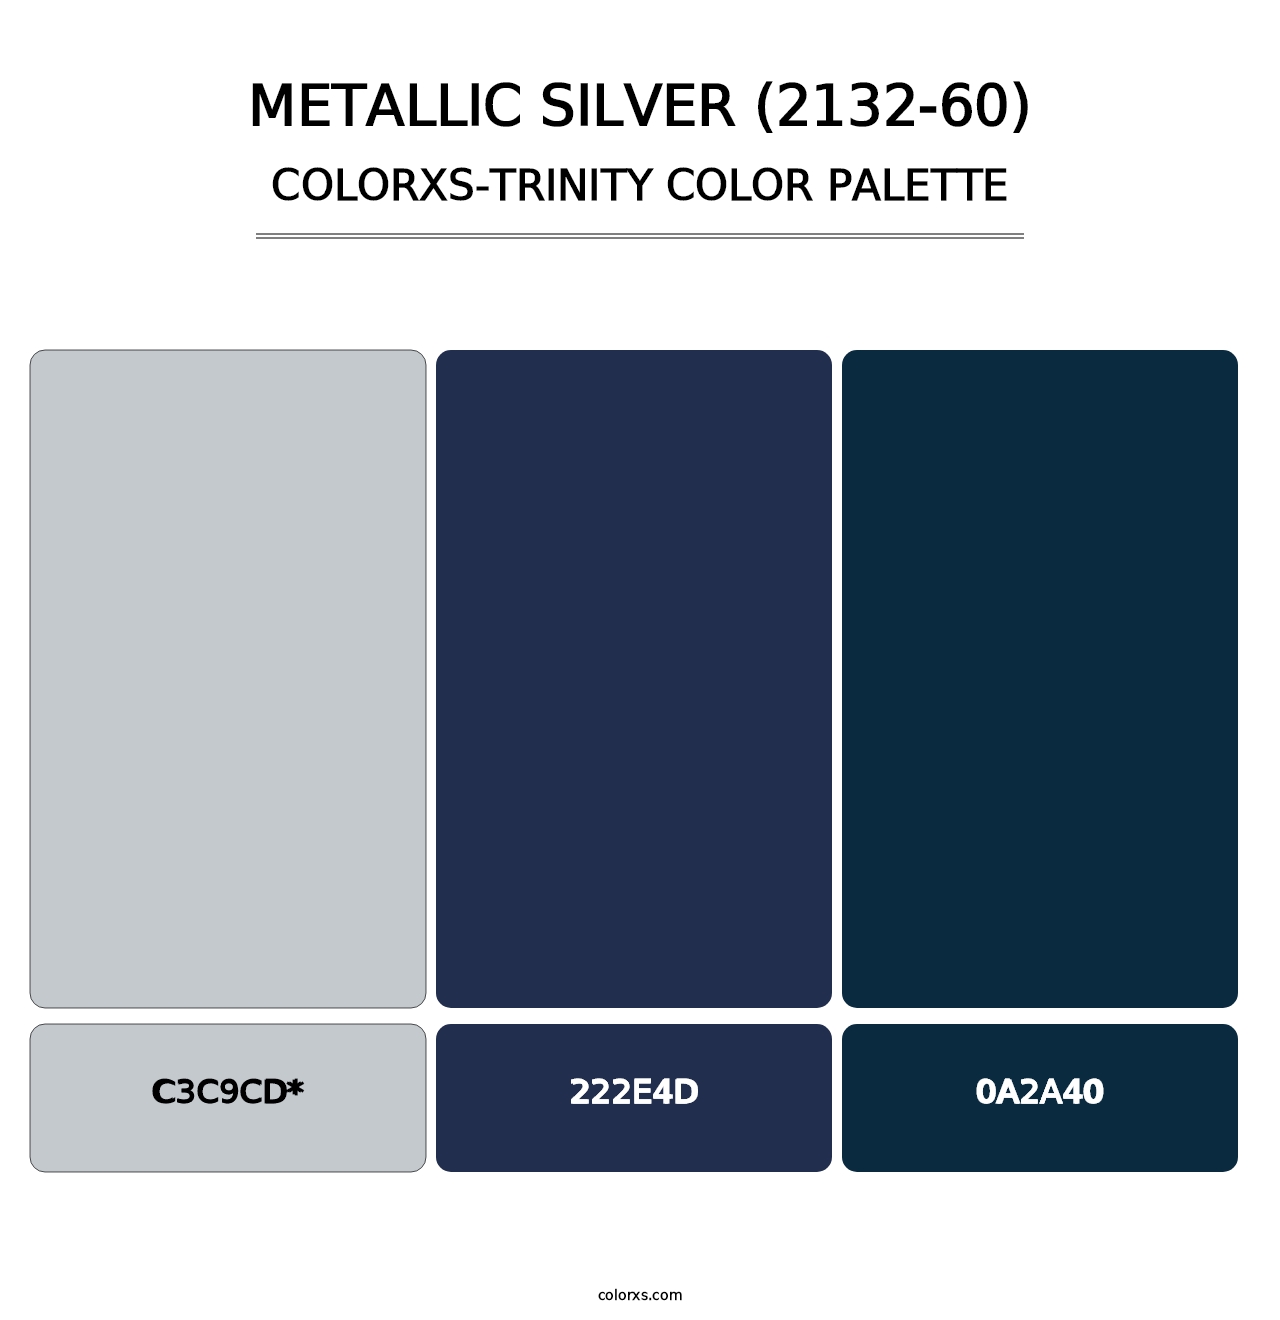 Metallic Silver (2132-60) - Colorxs Trinity Palette